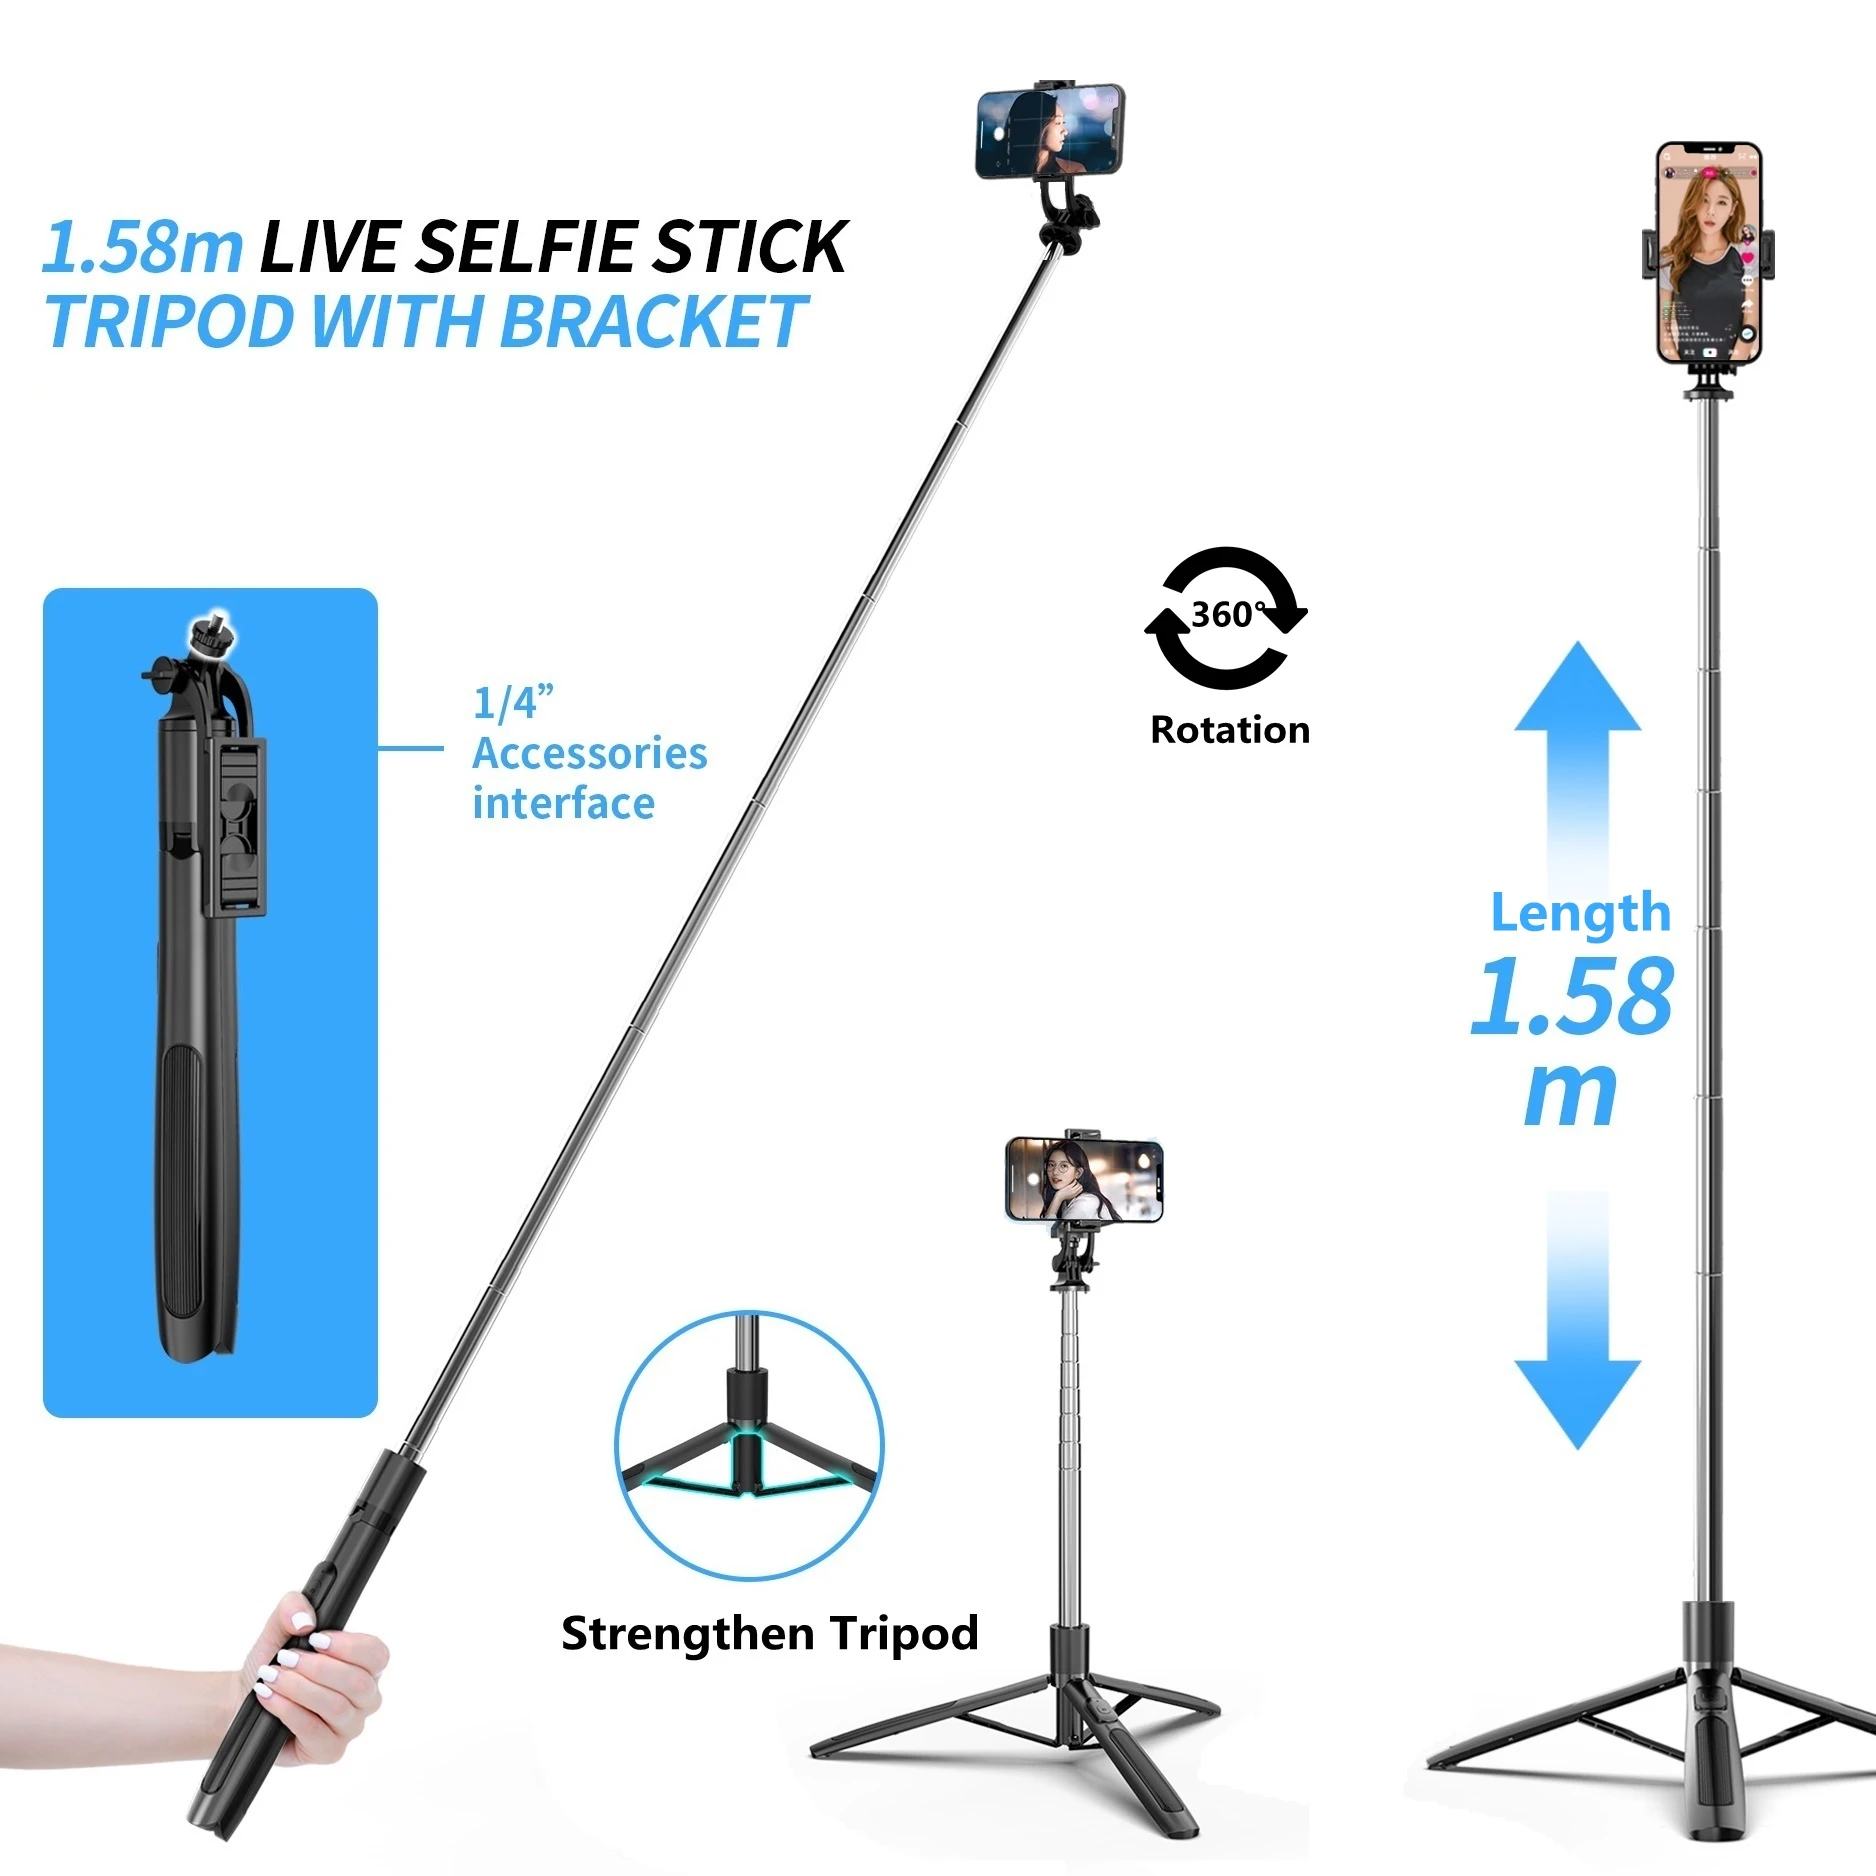 COOL DIER 1580mm New Wireless Selfie Stick Tripod Foldable Monopod For Gopro Action Cameras Smartphones Selfie